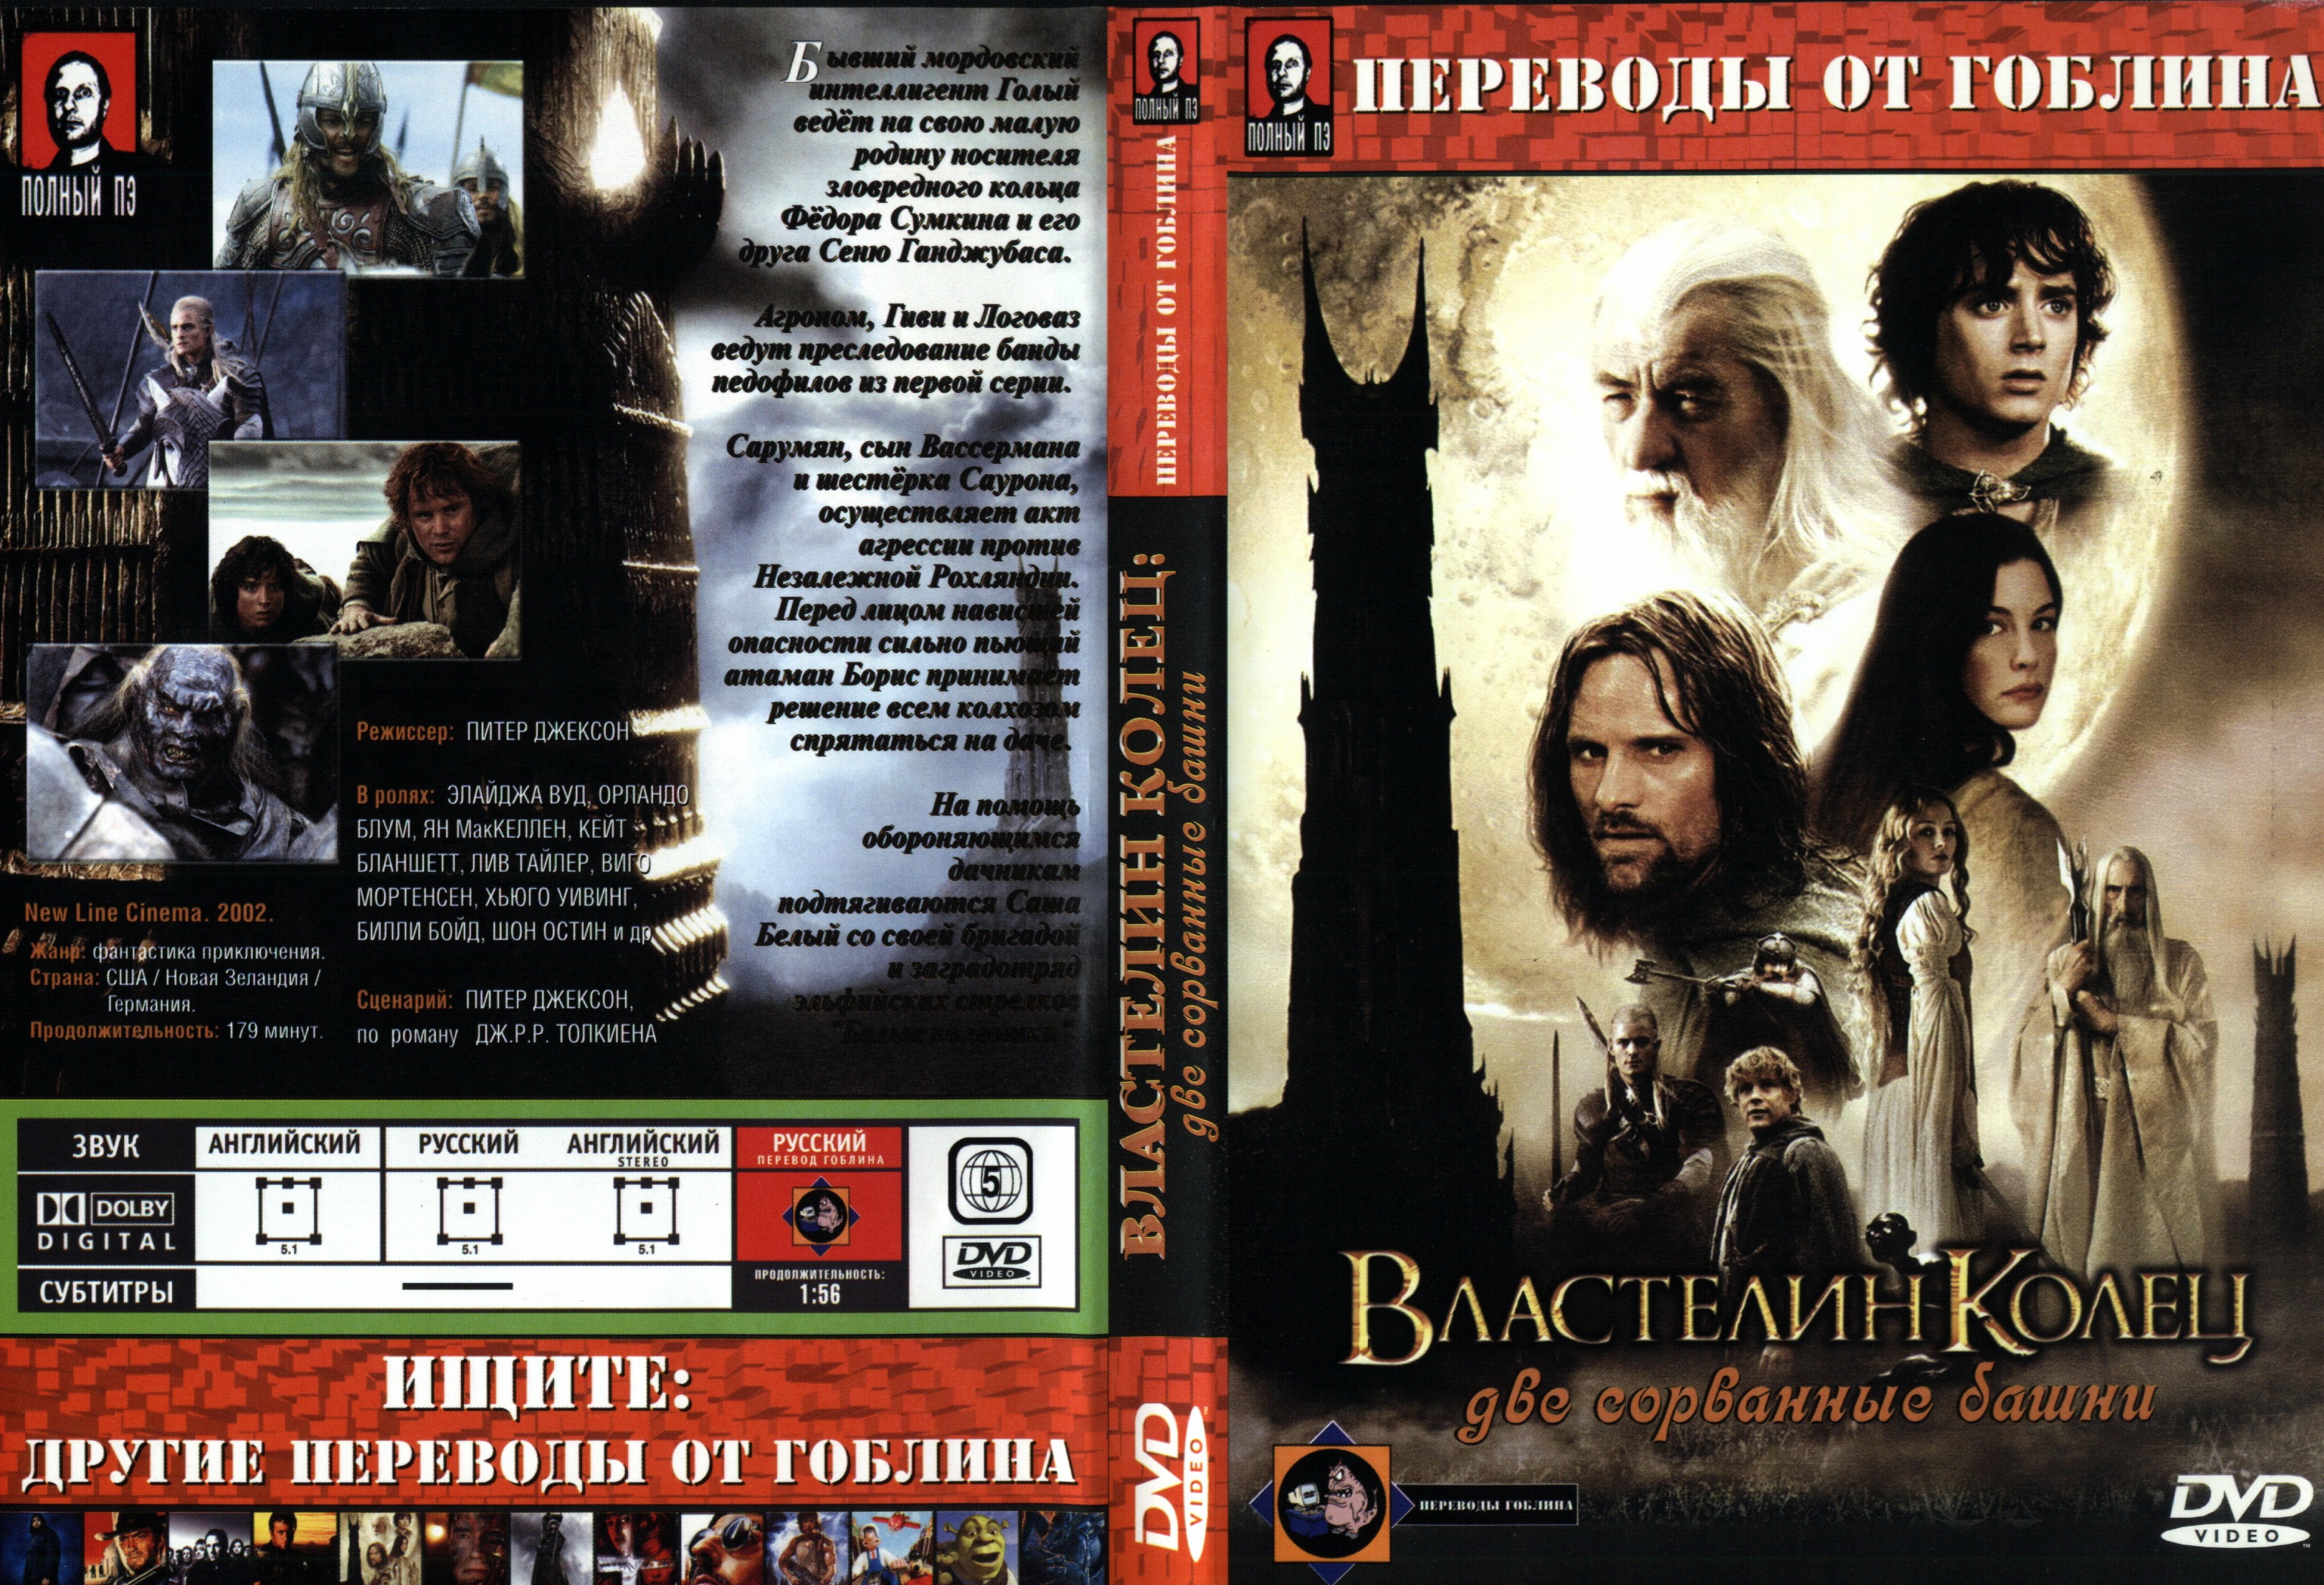 Властелин колец: Две сорванные башни / The Lord of the Rings: The Two Towers / 2002 / АП (Пучков) / HEVC / BDRip (1080p)